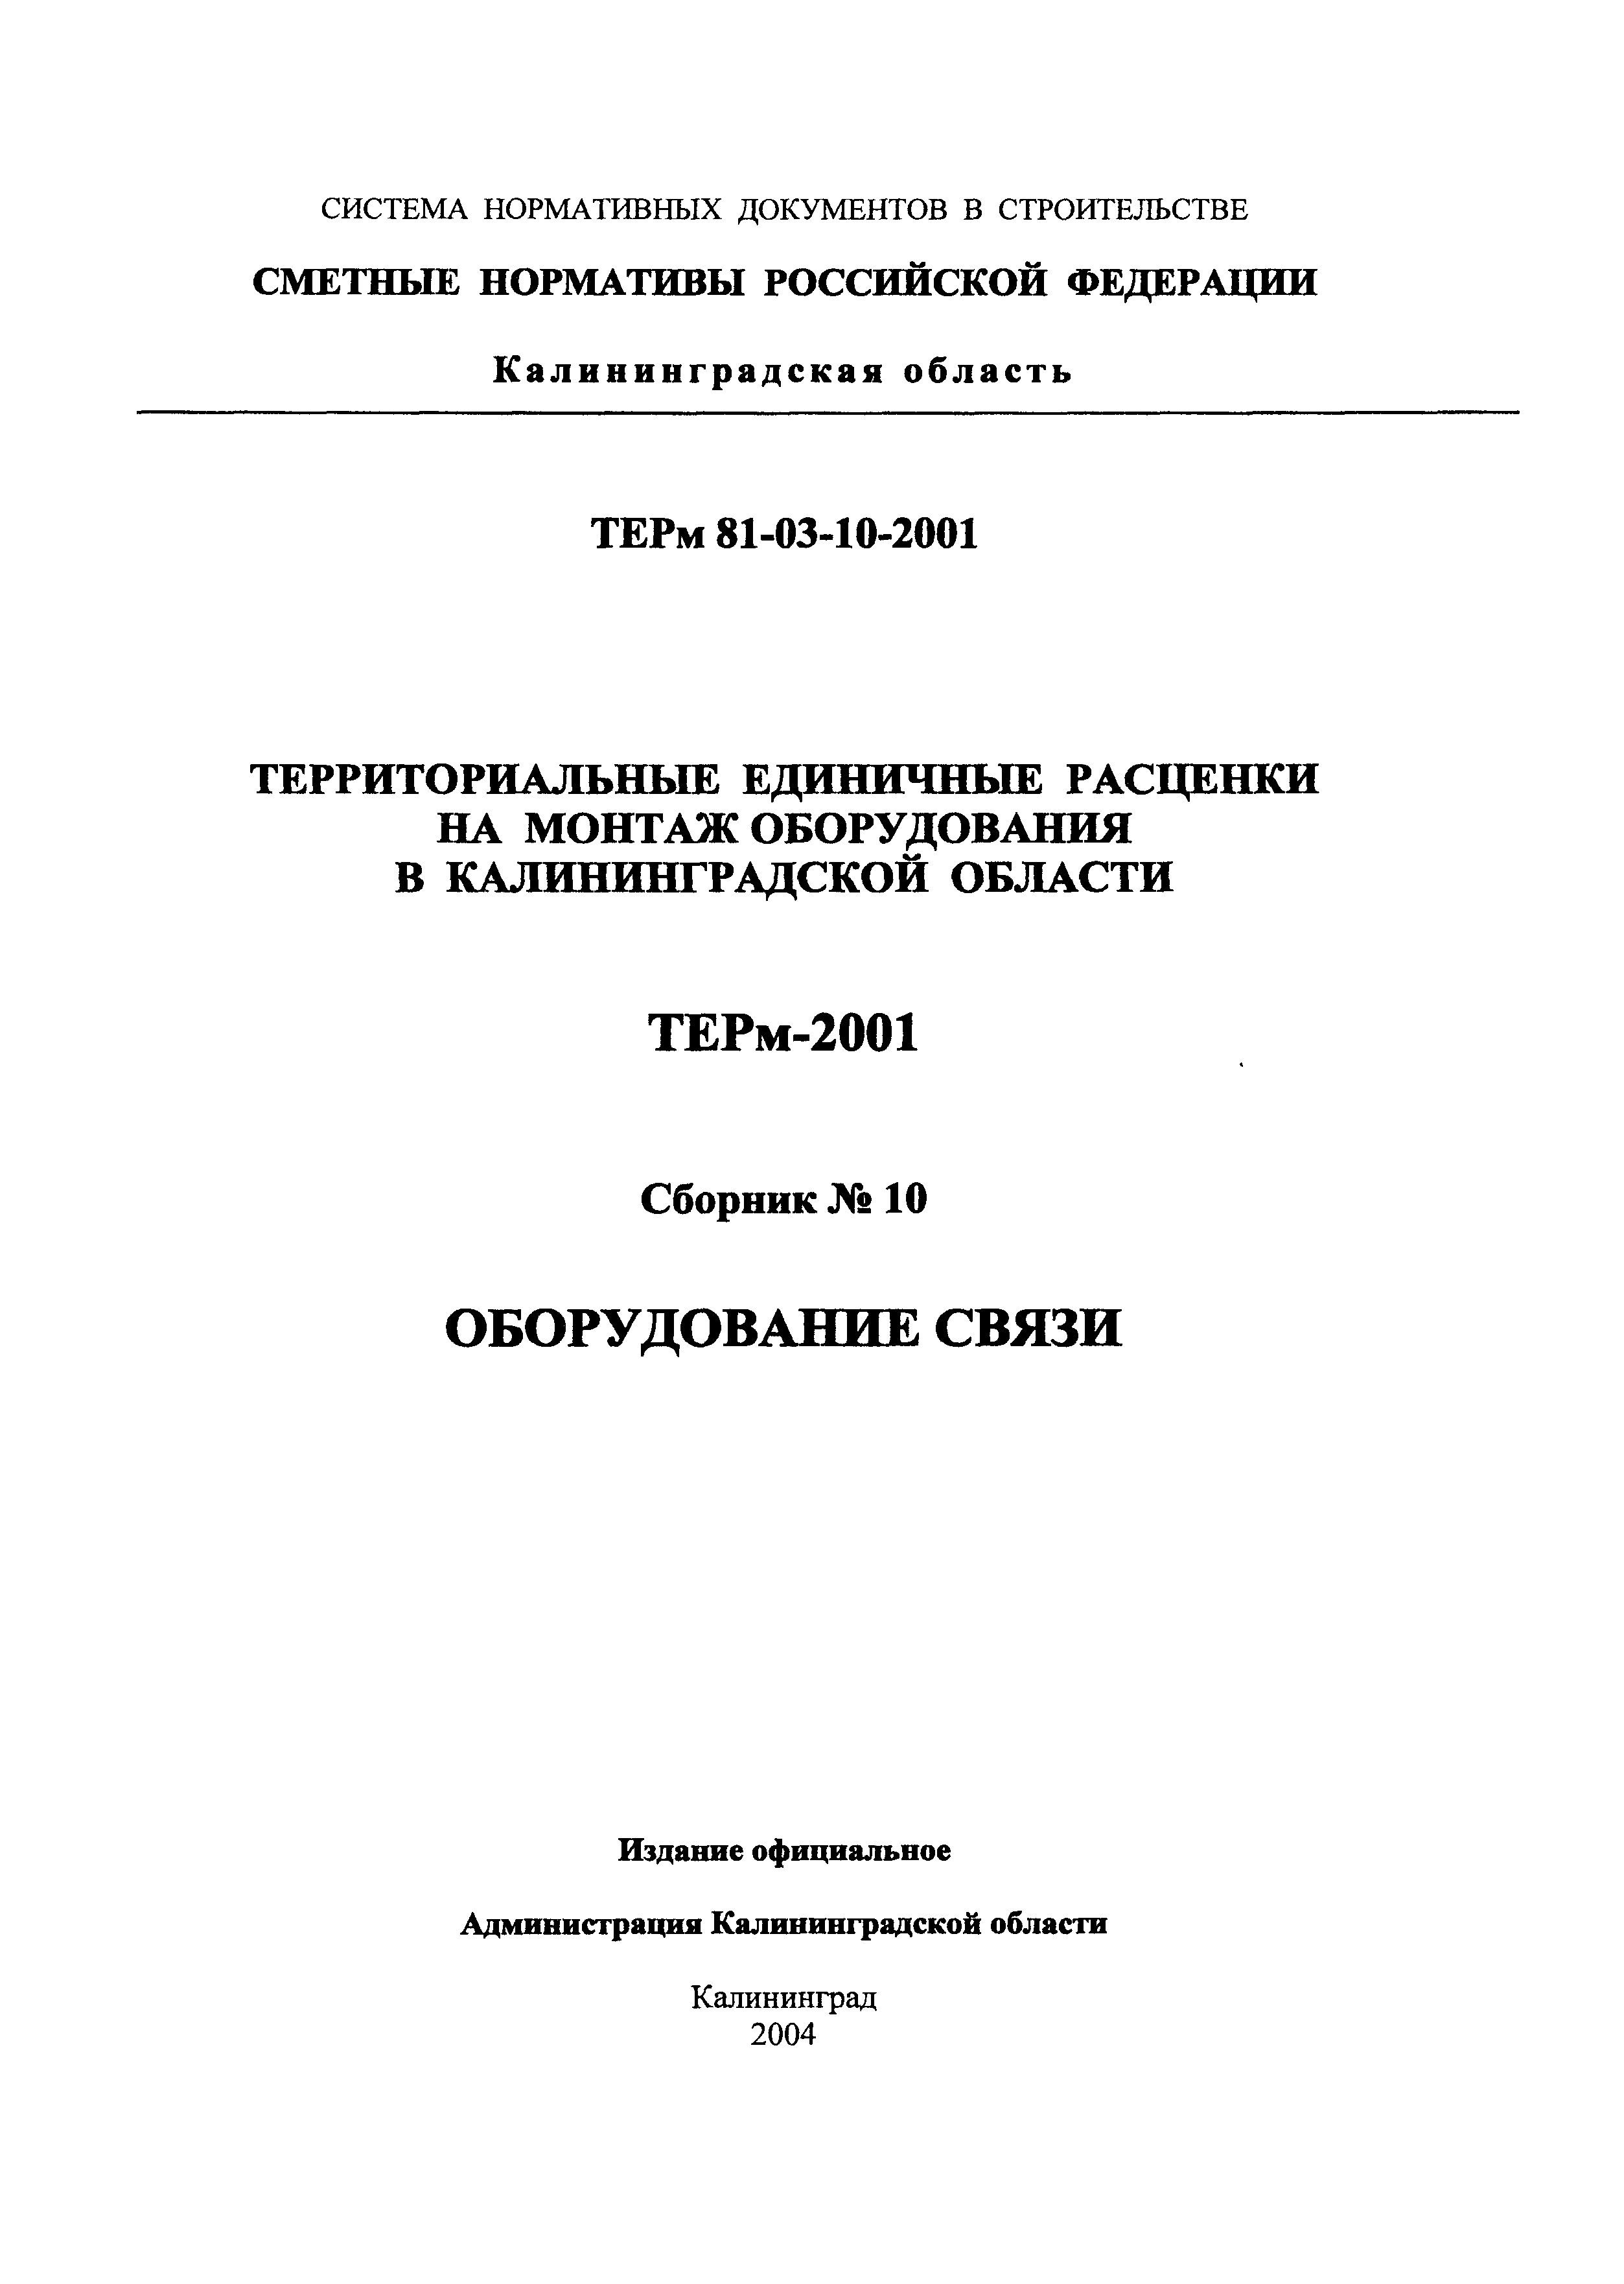 ТЕРм Калининградской области 2001-10